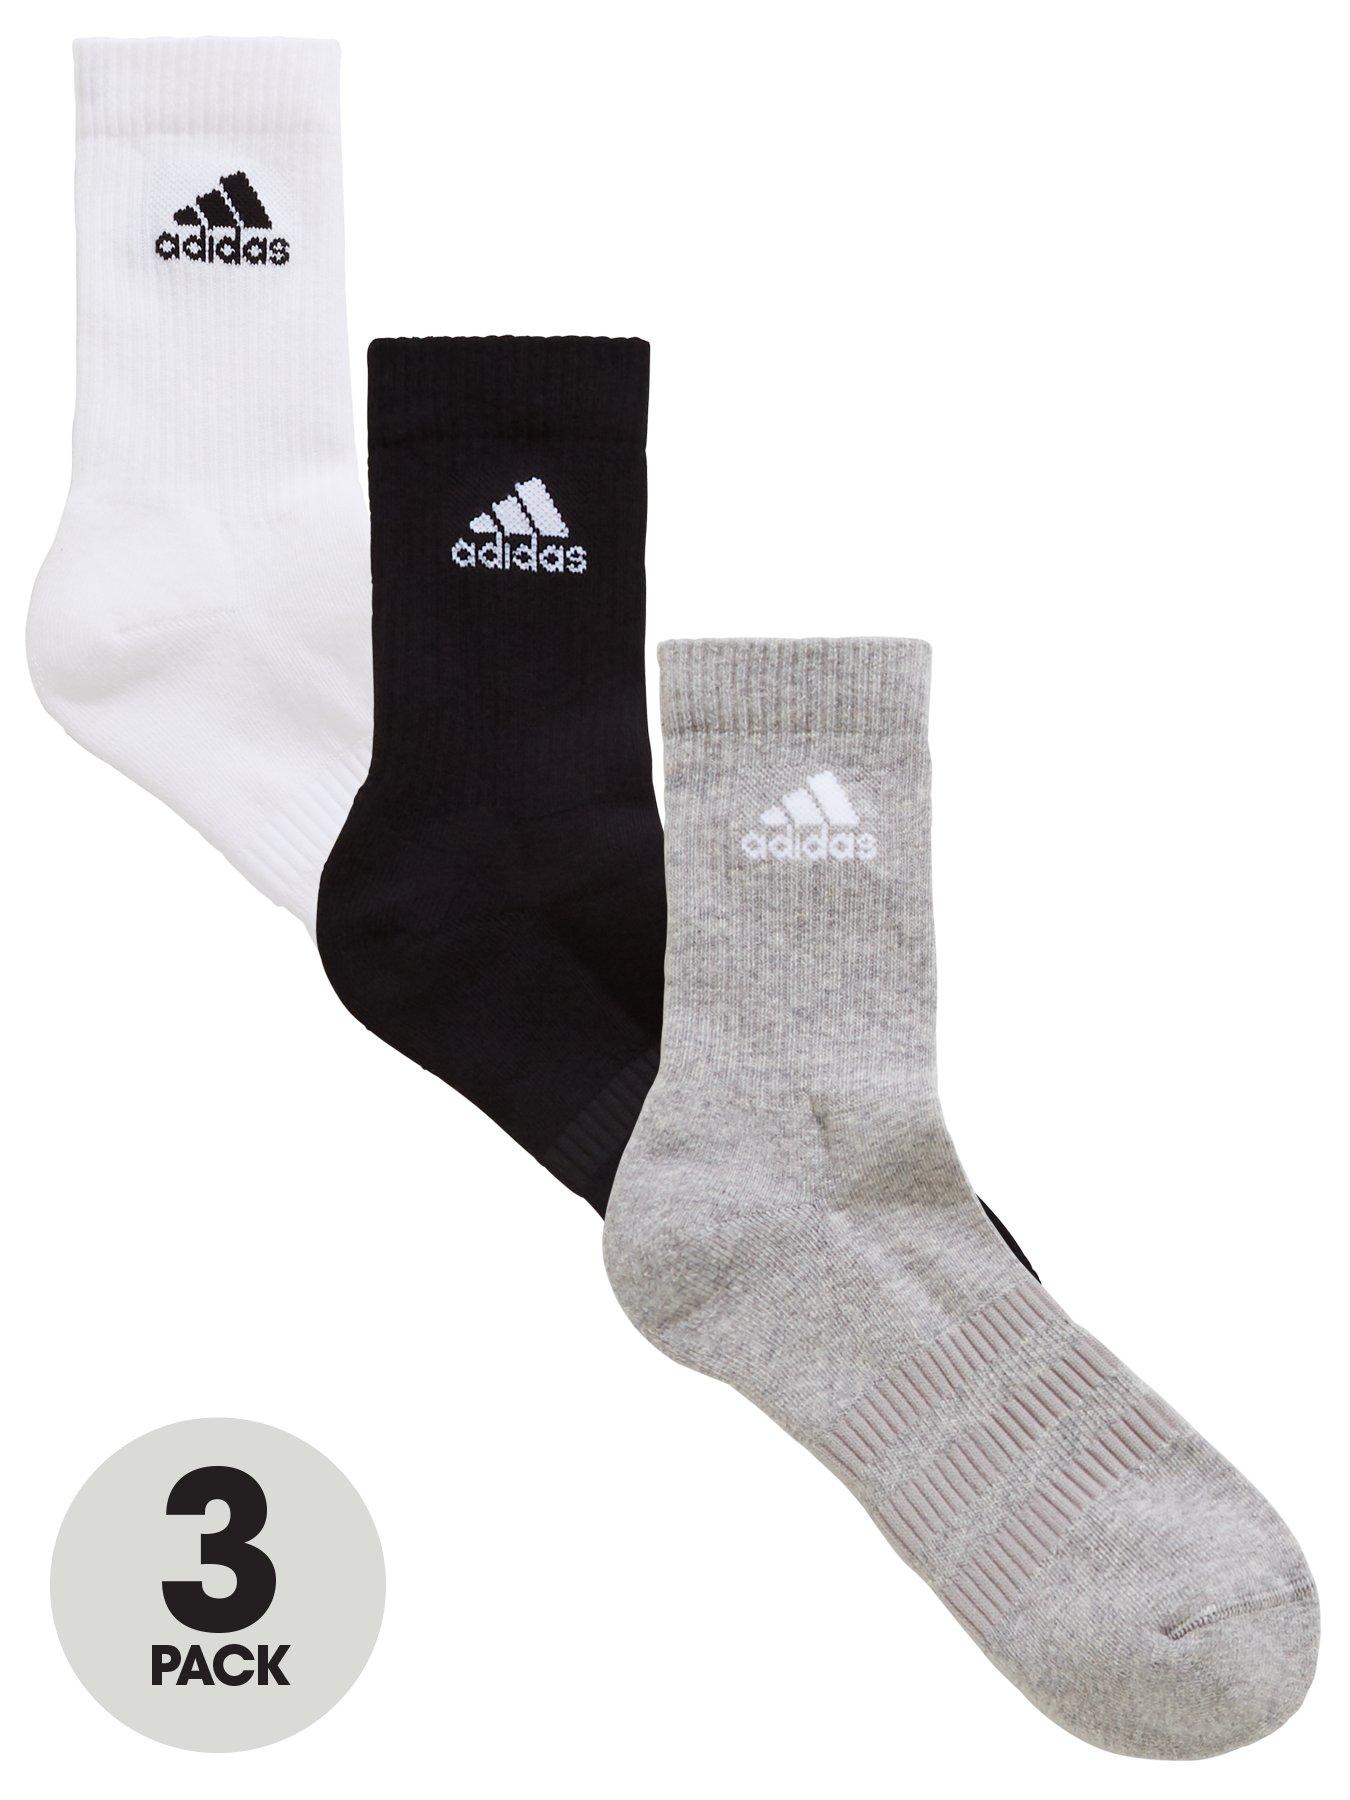 adidas crew socks 3 pack